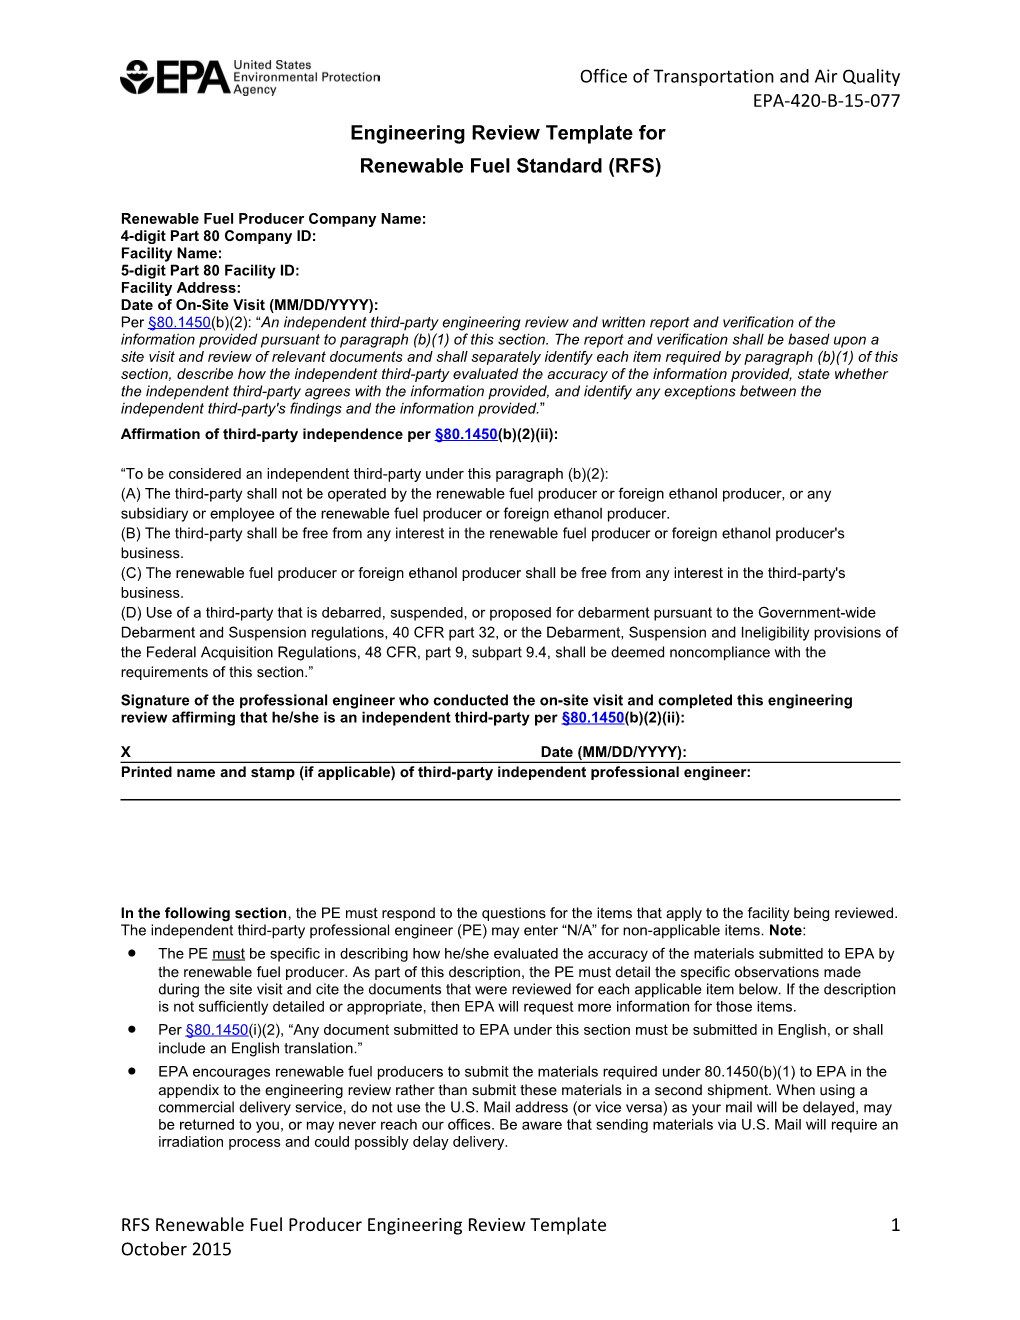 Renewable Fuel Standard (RFS) Engineering Review Template (EPA-420-B-15-077, October 2015)